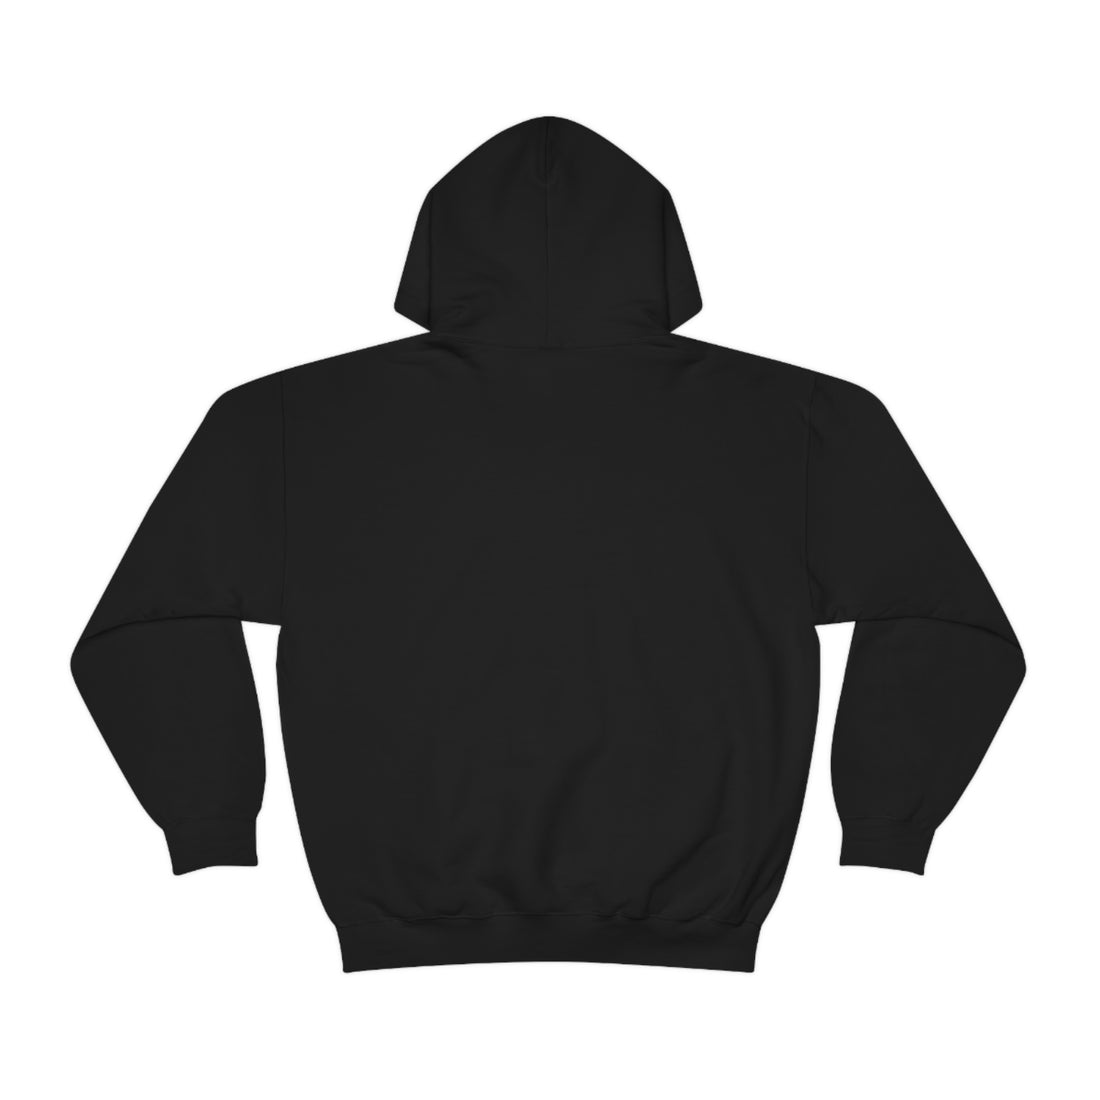 Dad To Be - Unisex Heavy Blend™ Hooded Sweatshirt